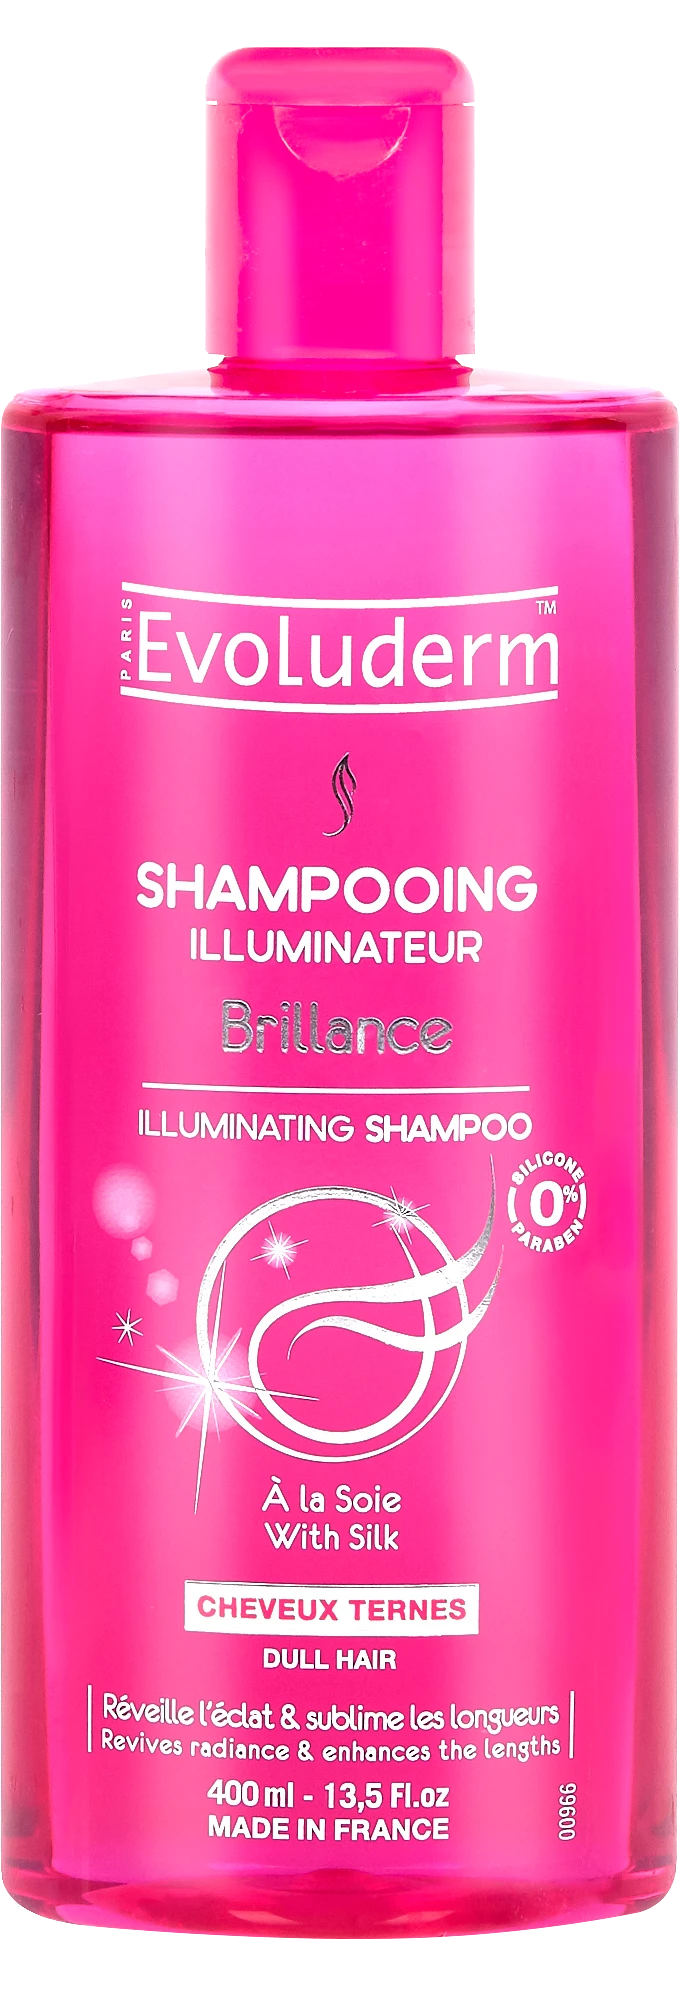 Shampoing Illuminateur Brillance 400ml - Evoluderm